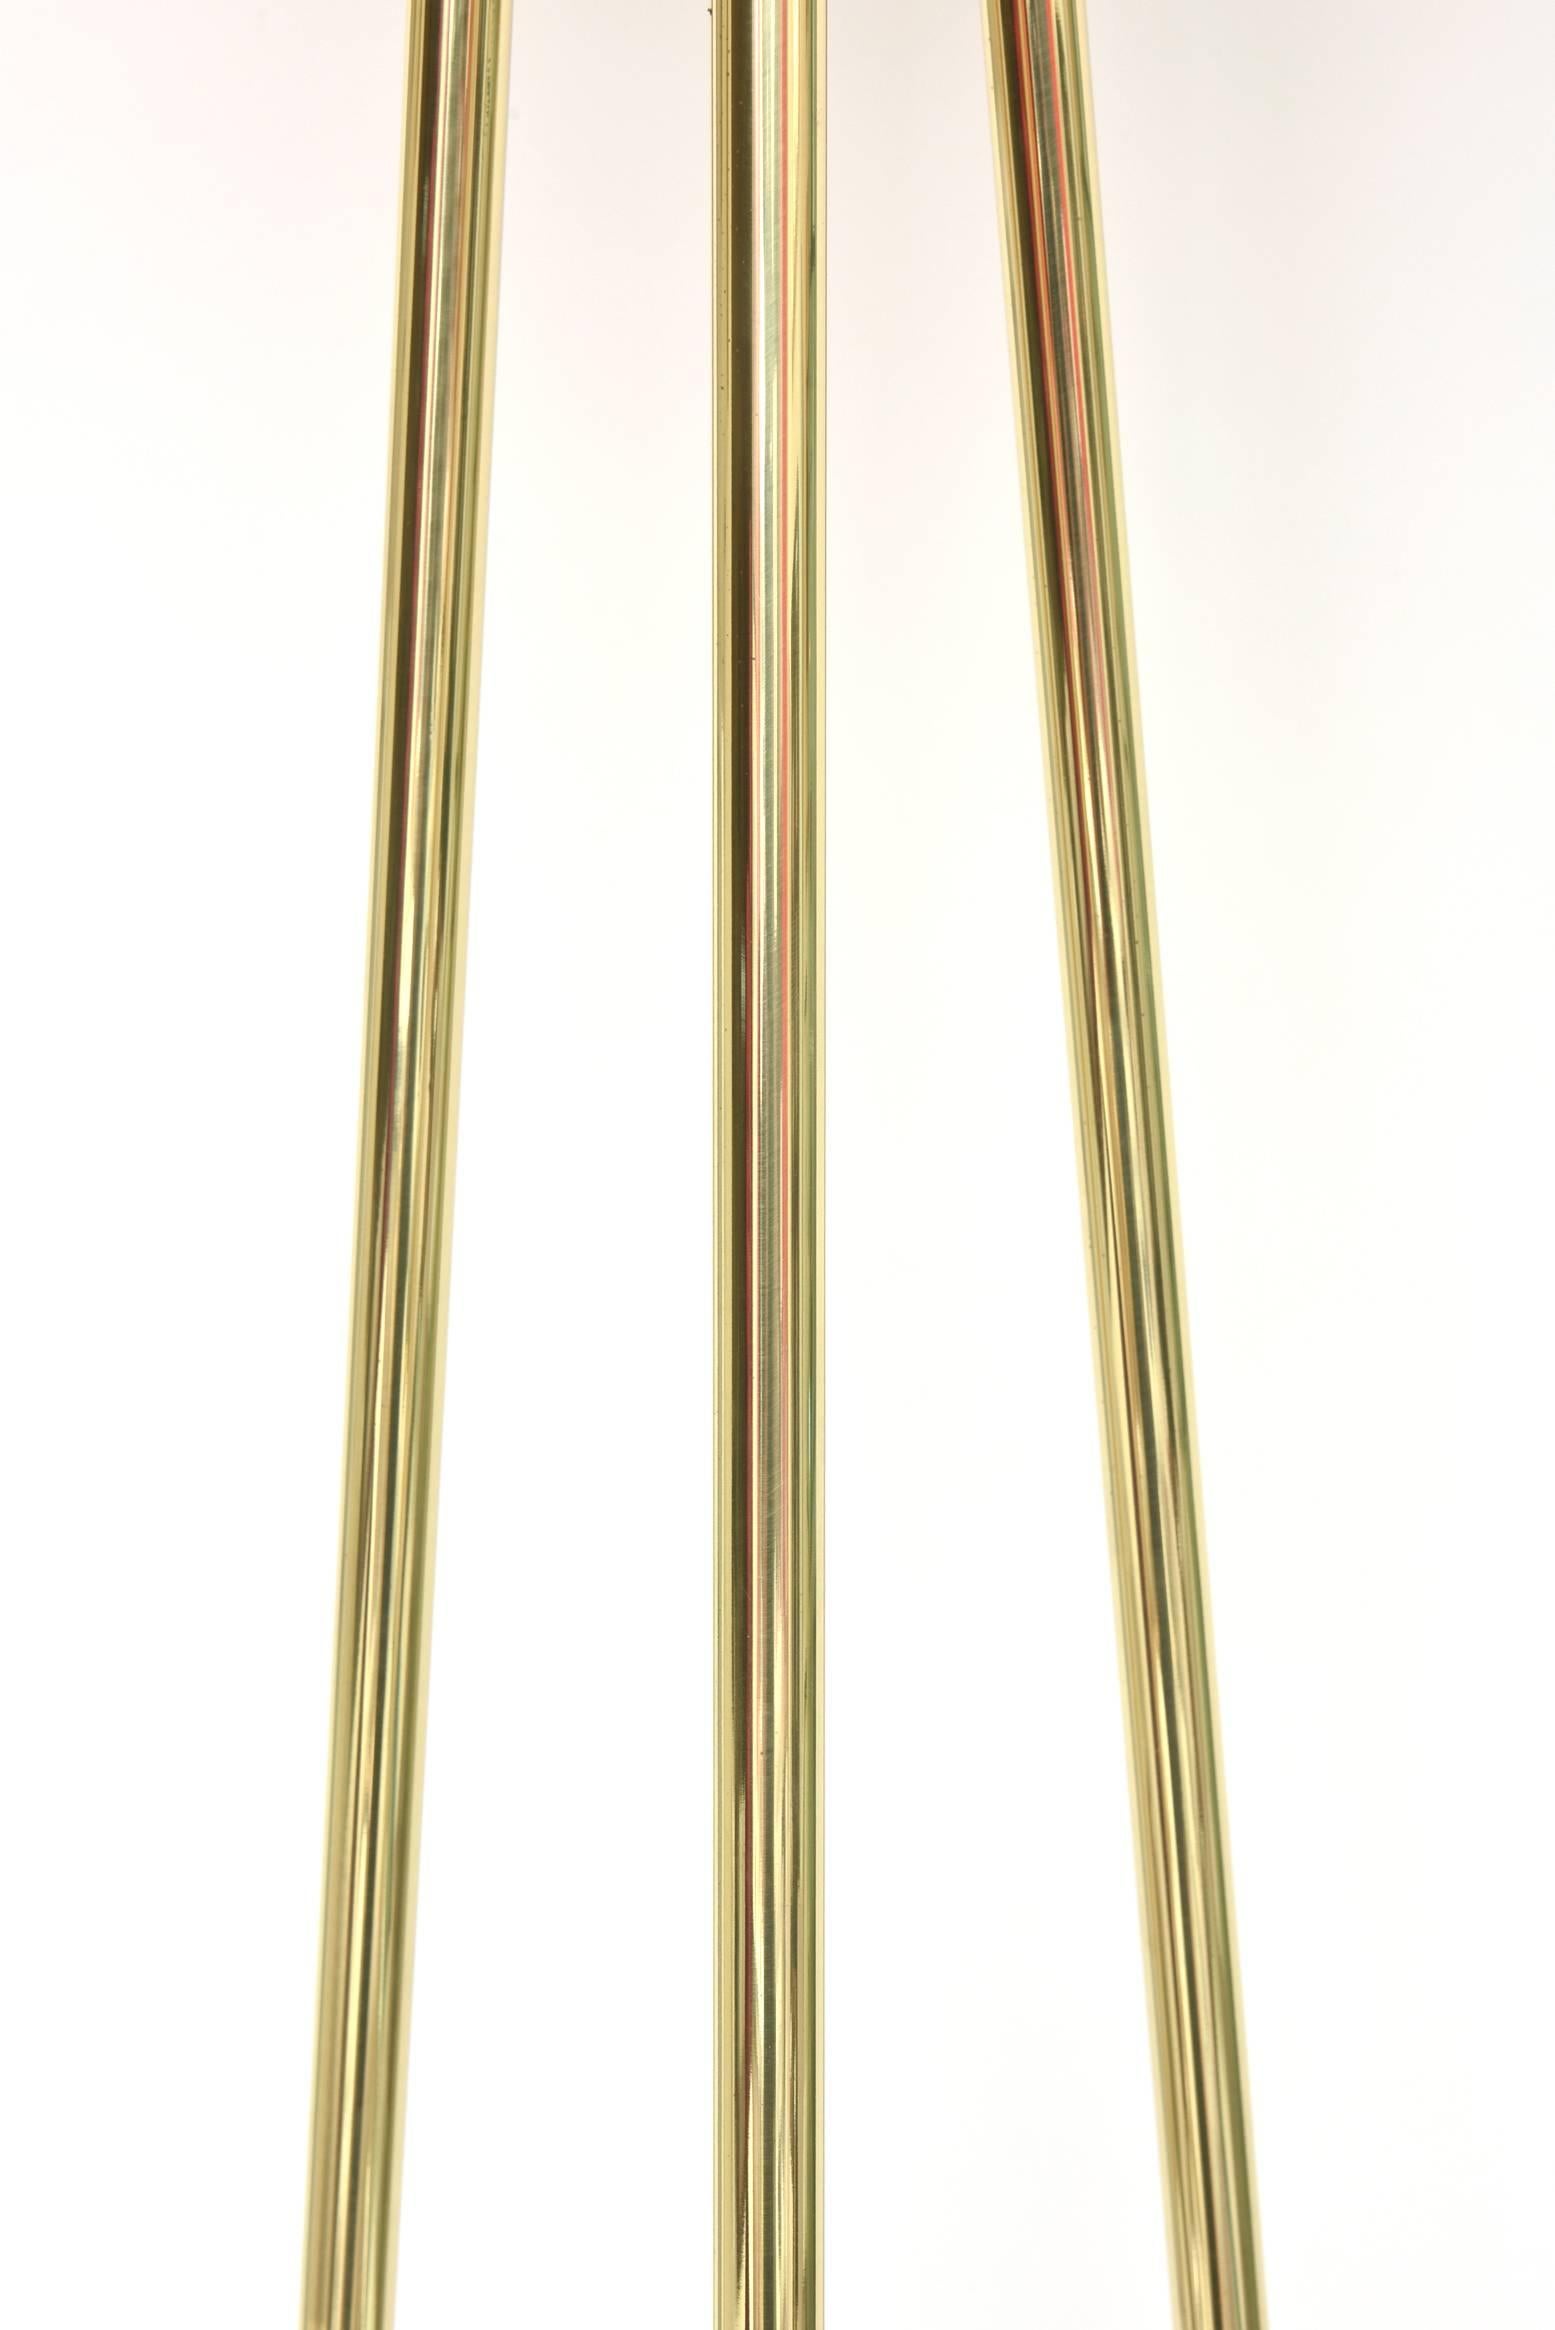 American Vintage Pair of Casella Brass Torcheres Floor Lamps